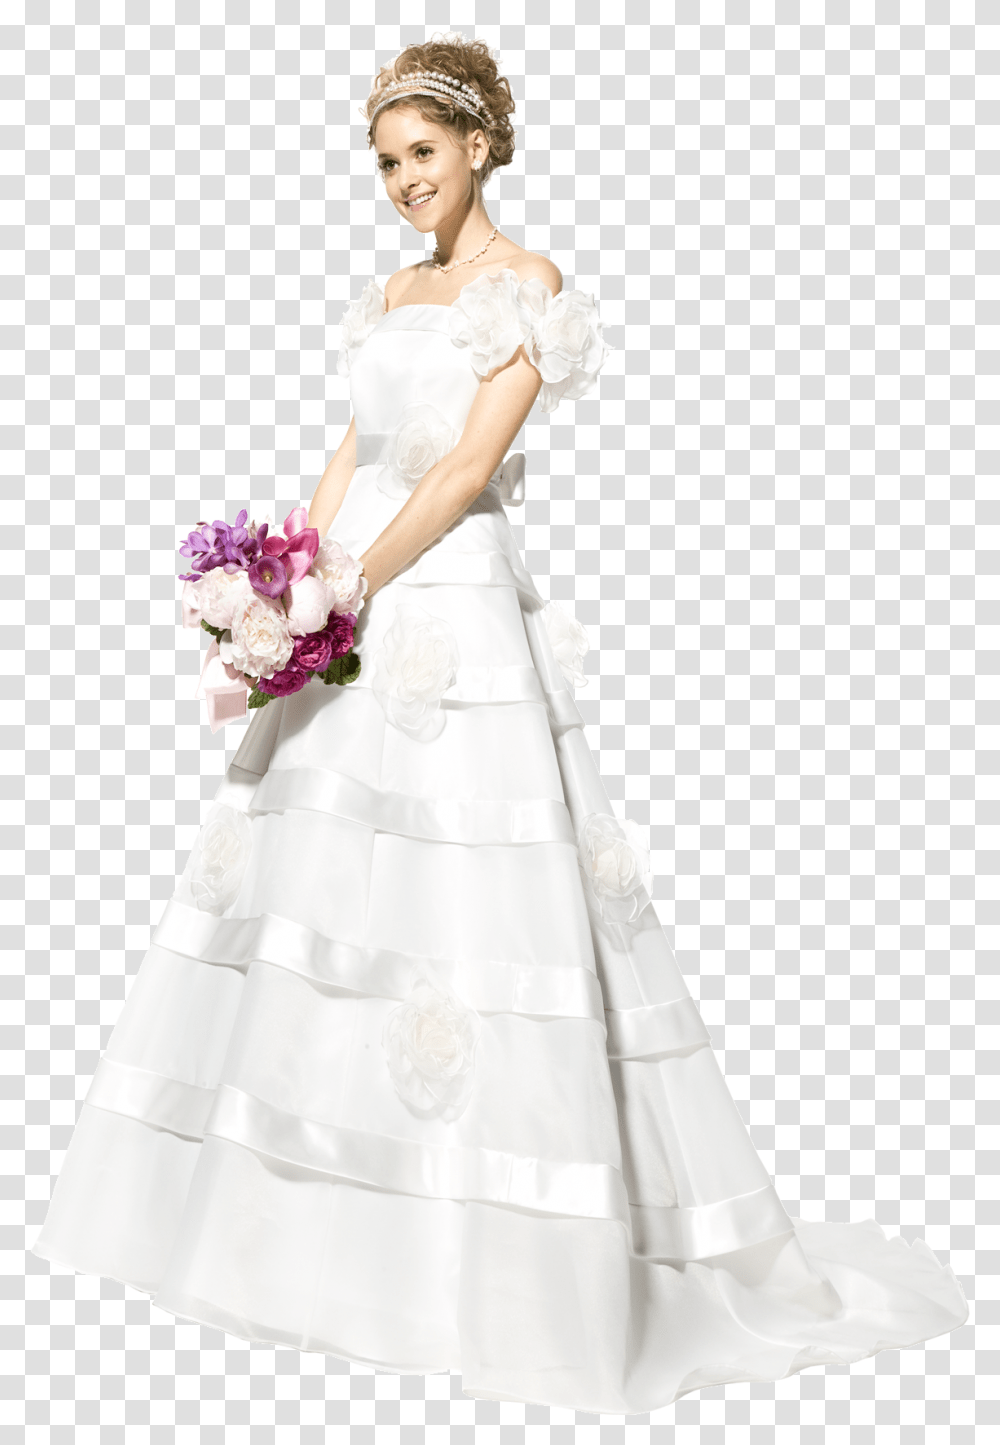 Woman In Wedding Dress Background Wedding Dress, Wedding Gown, Robe, Fashion Transparent Png